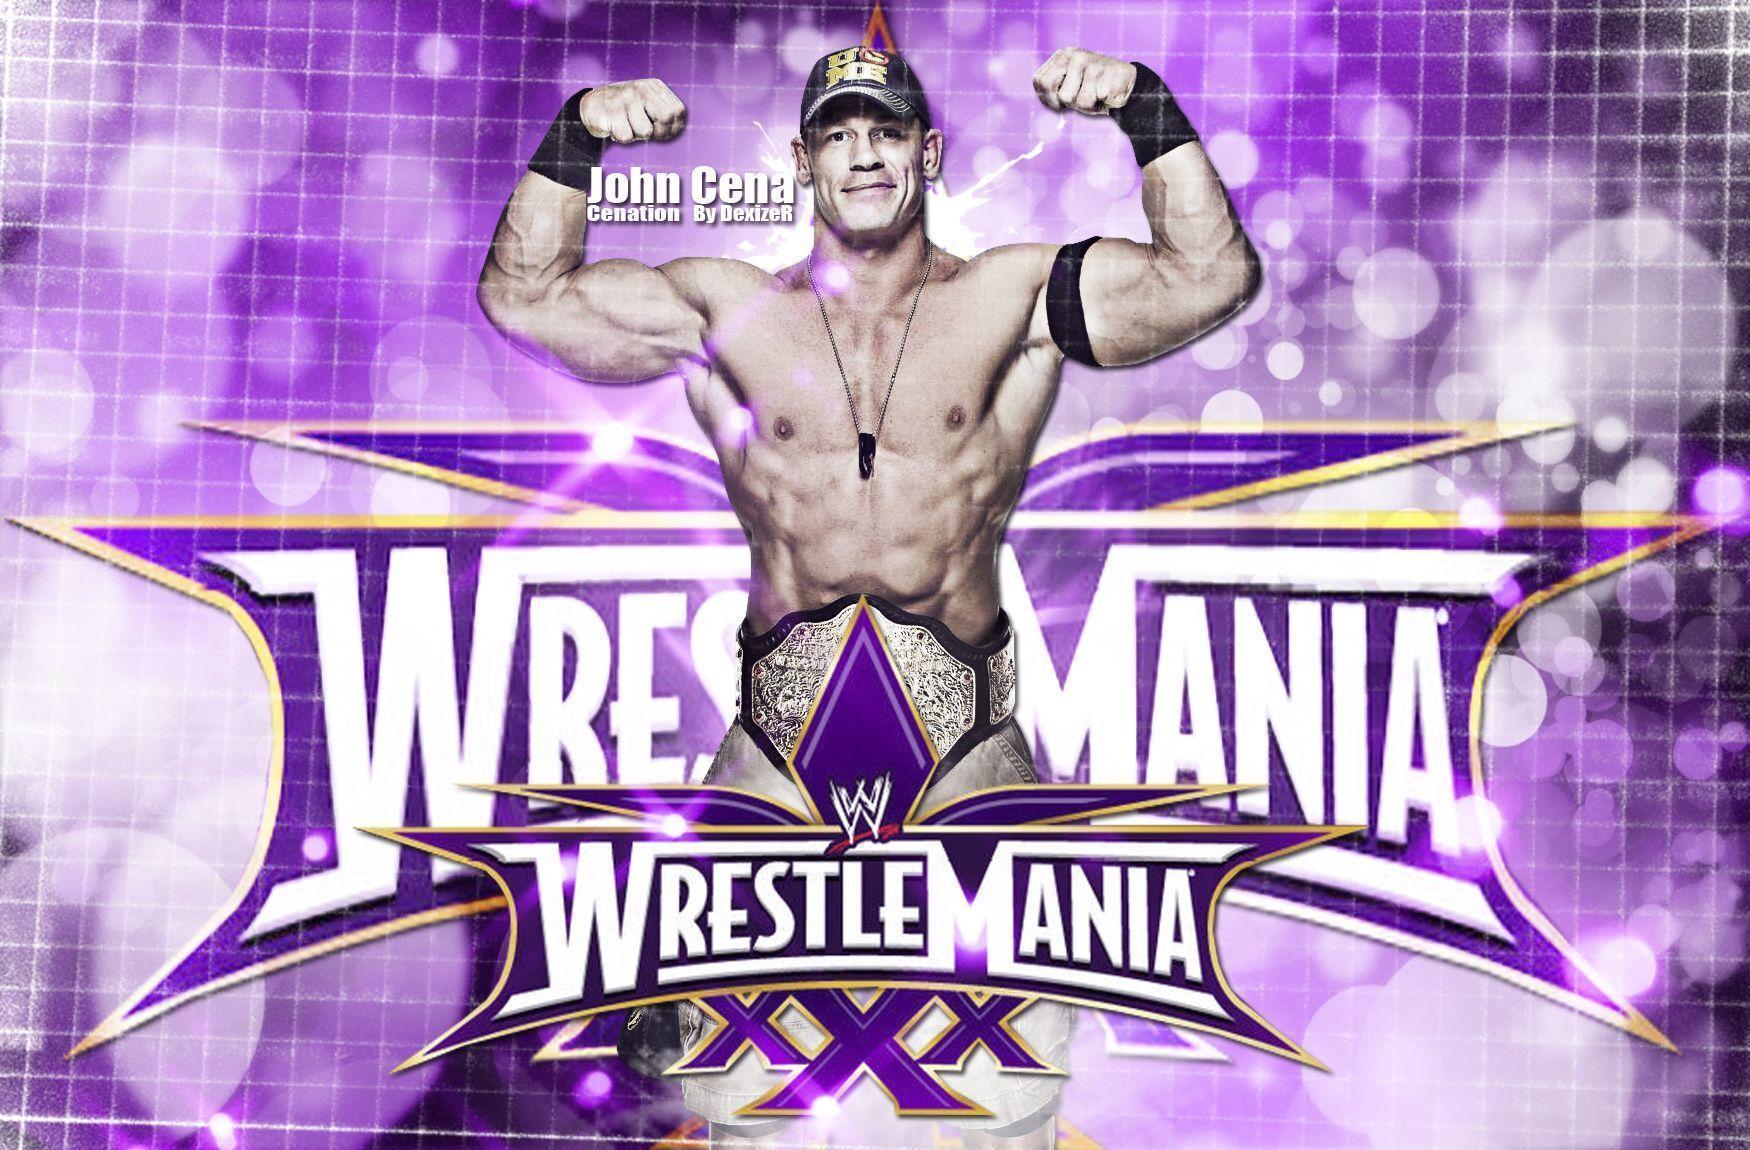 WWE John Cena Wrestlemania 30 2014 HD Wallpaper